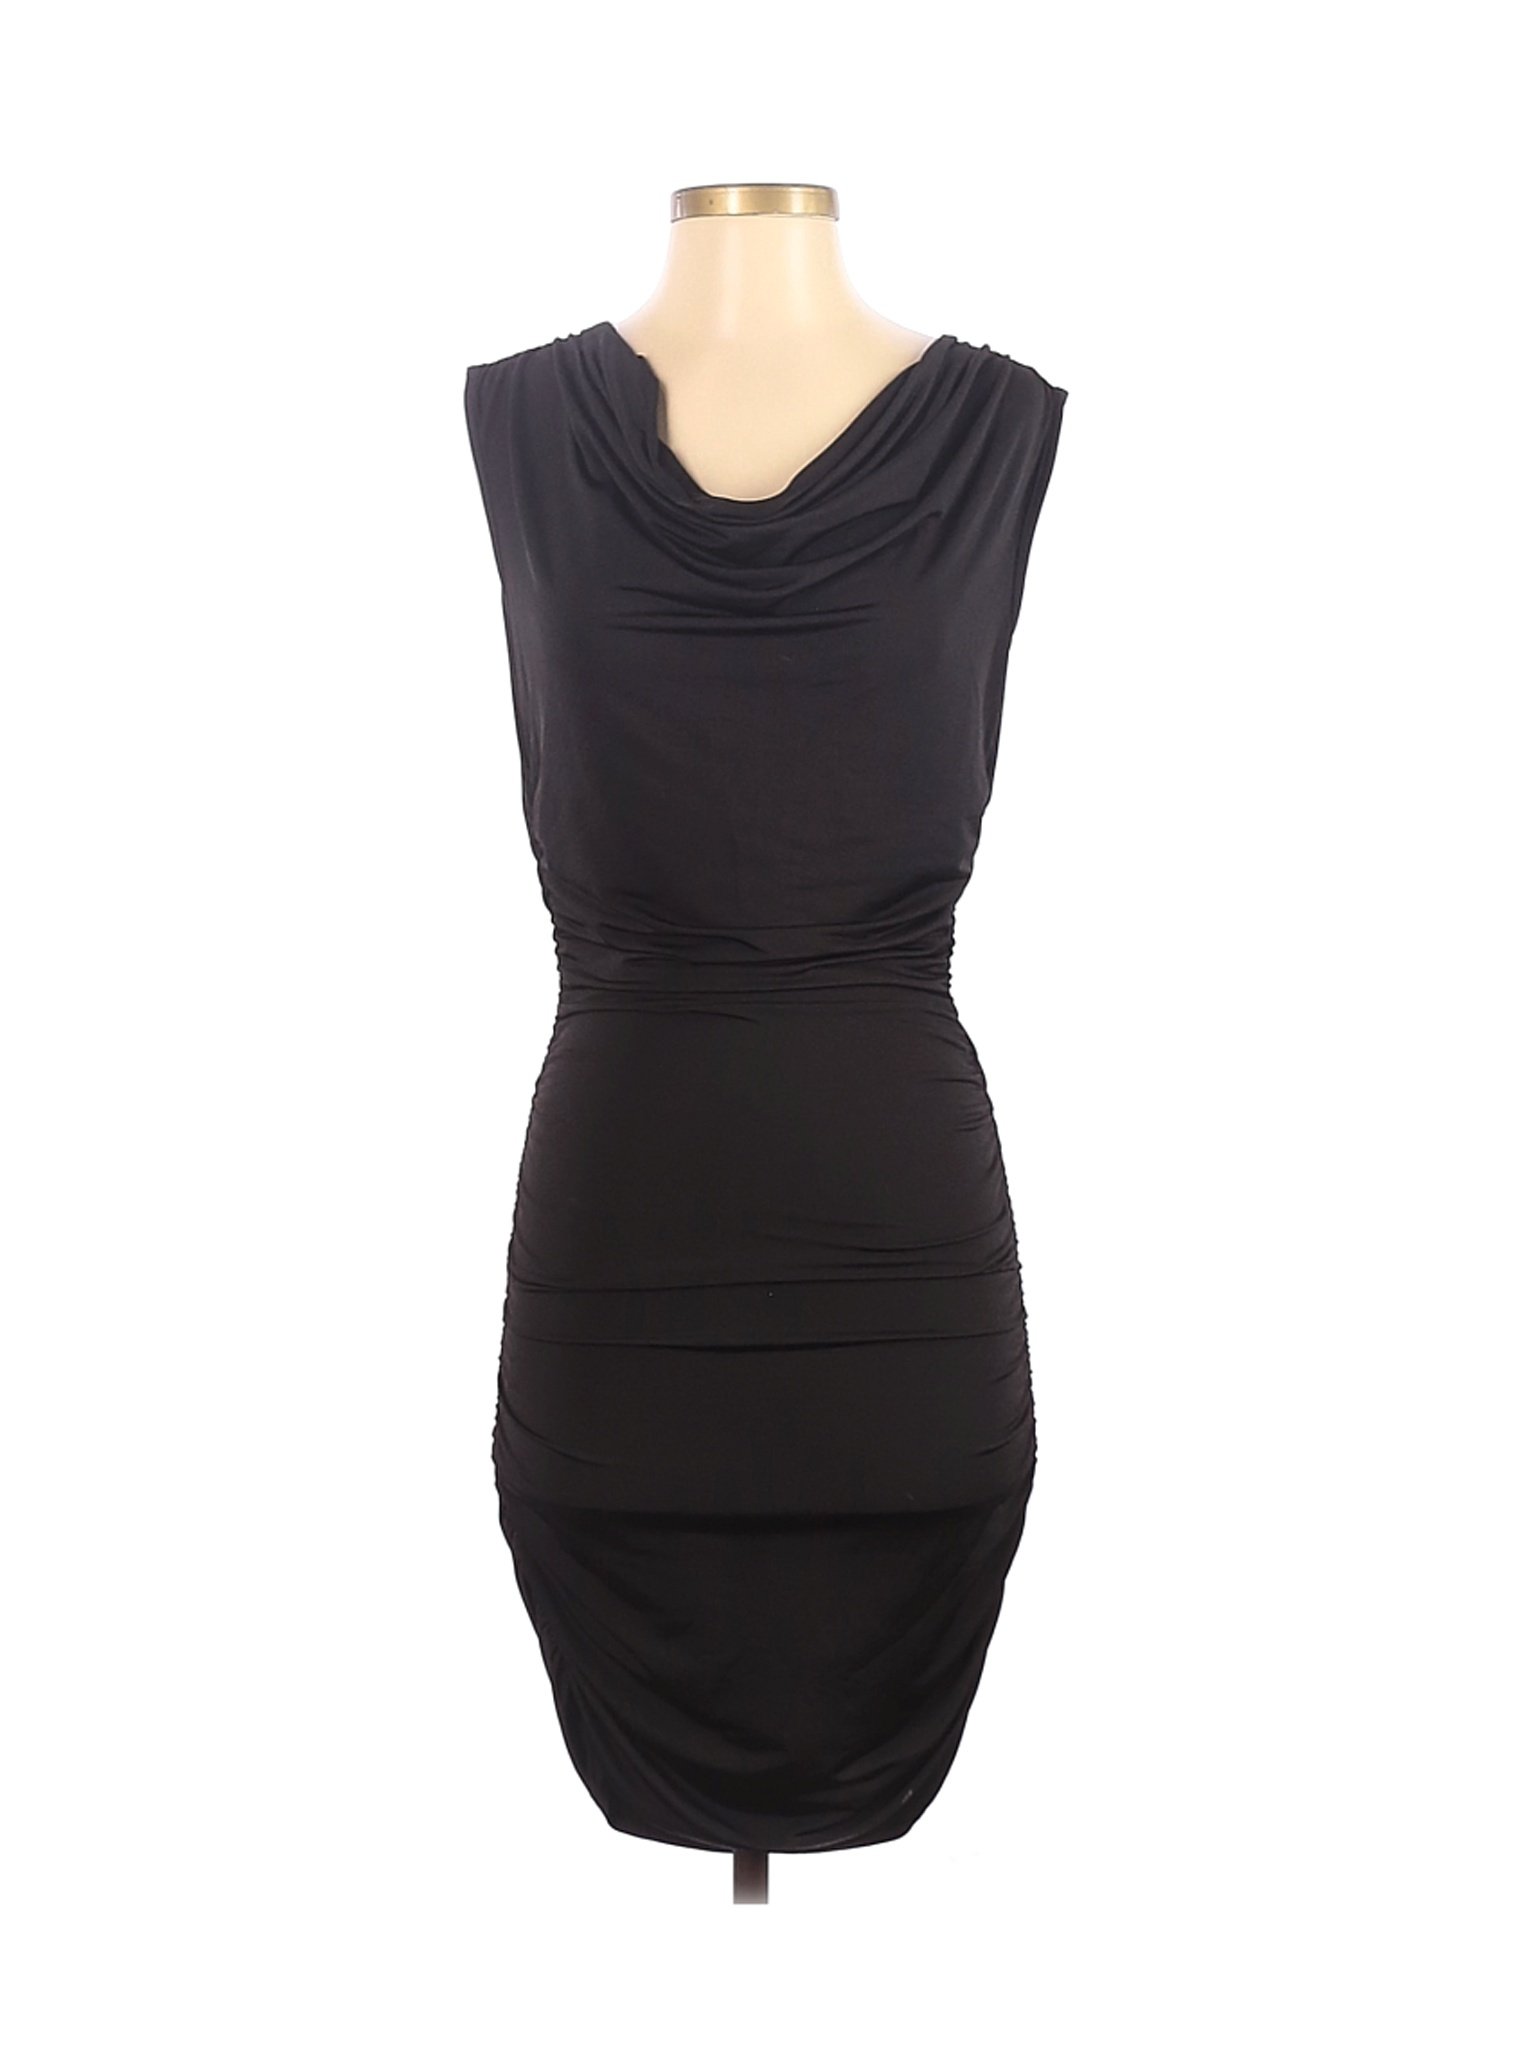 Charlotte Russe Women Black Cocktail Dress S | eBay